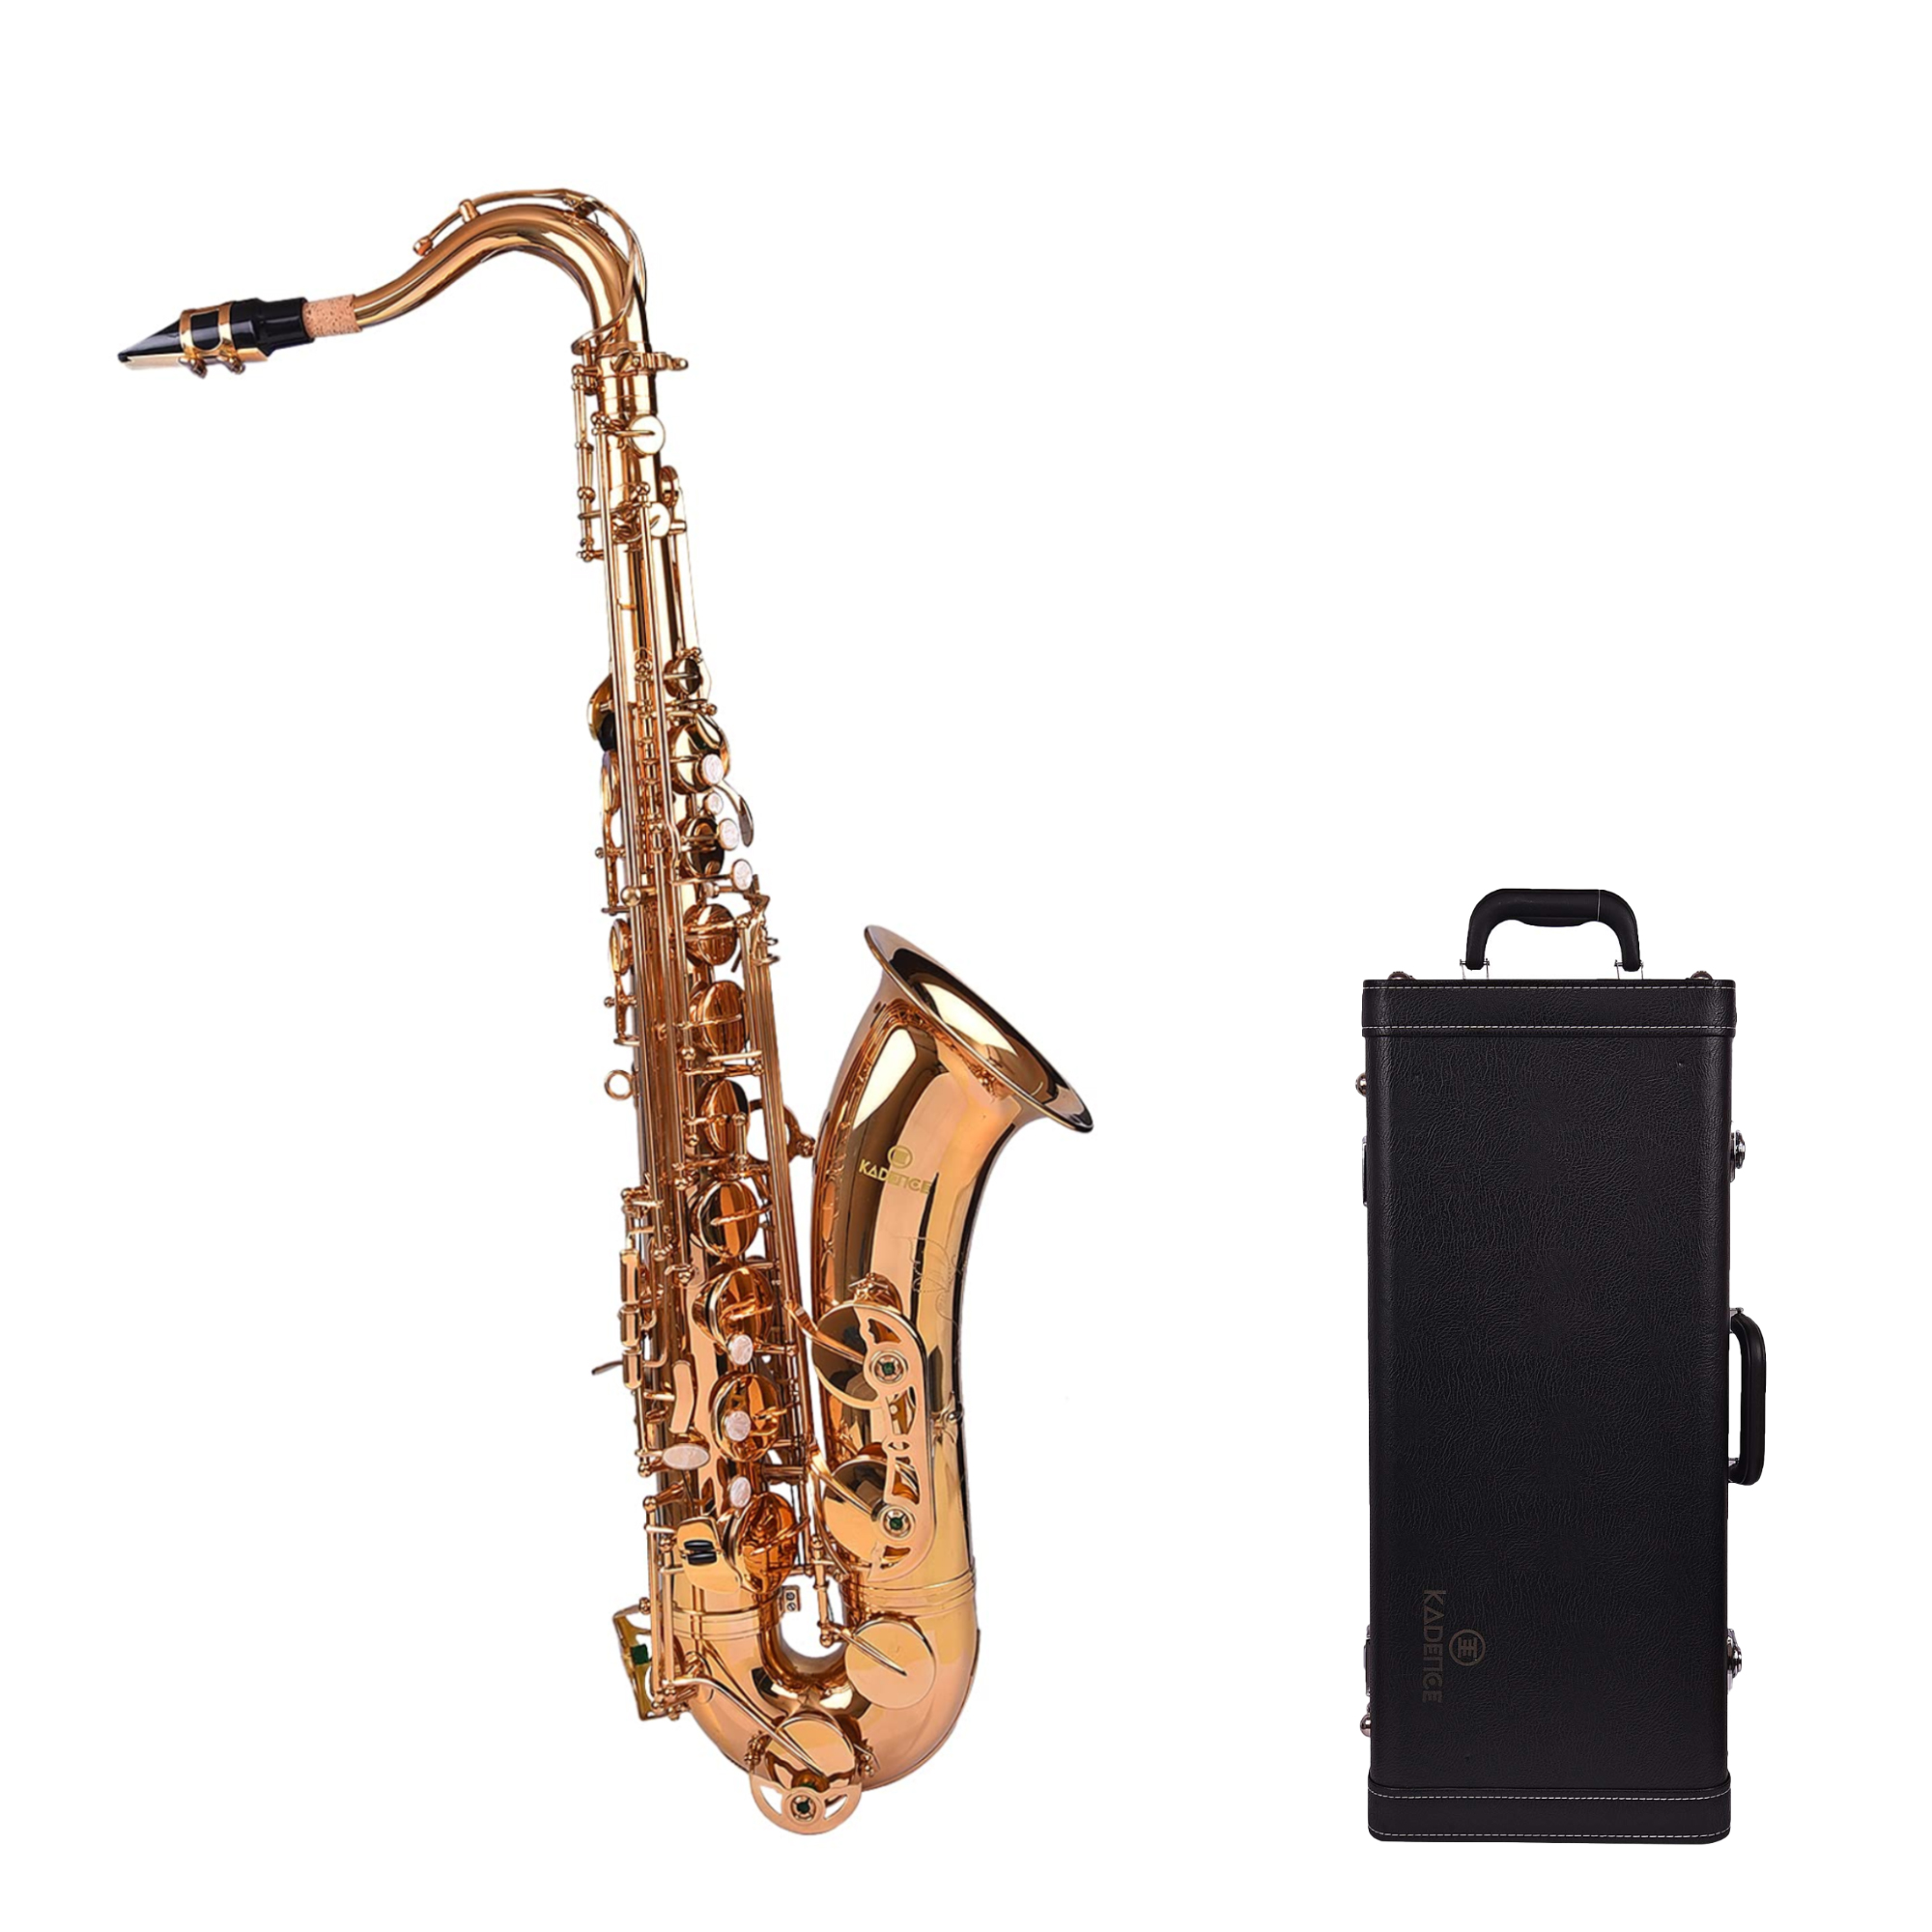 Tenor Gold Saxophone